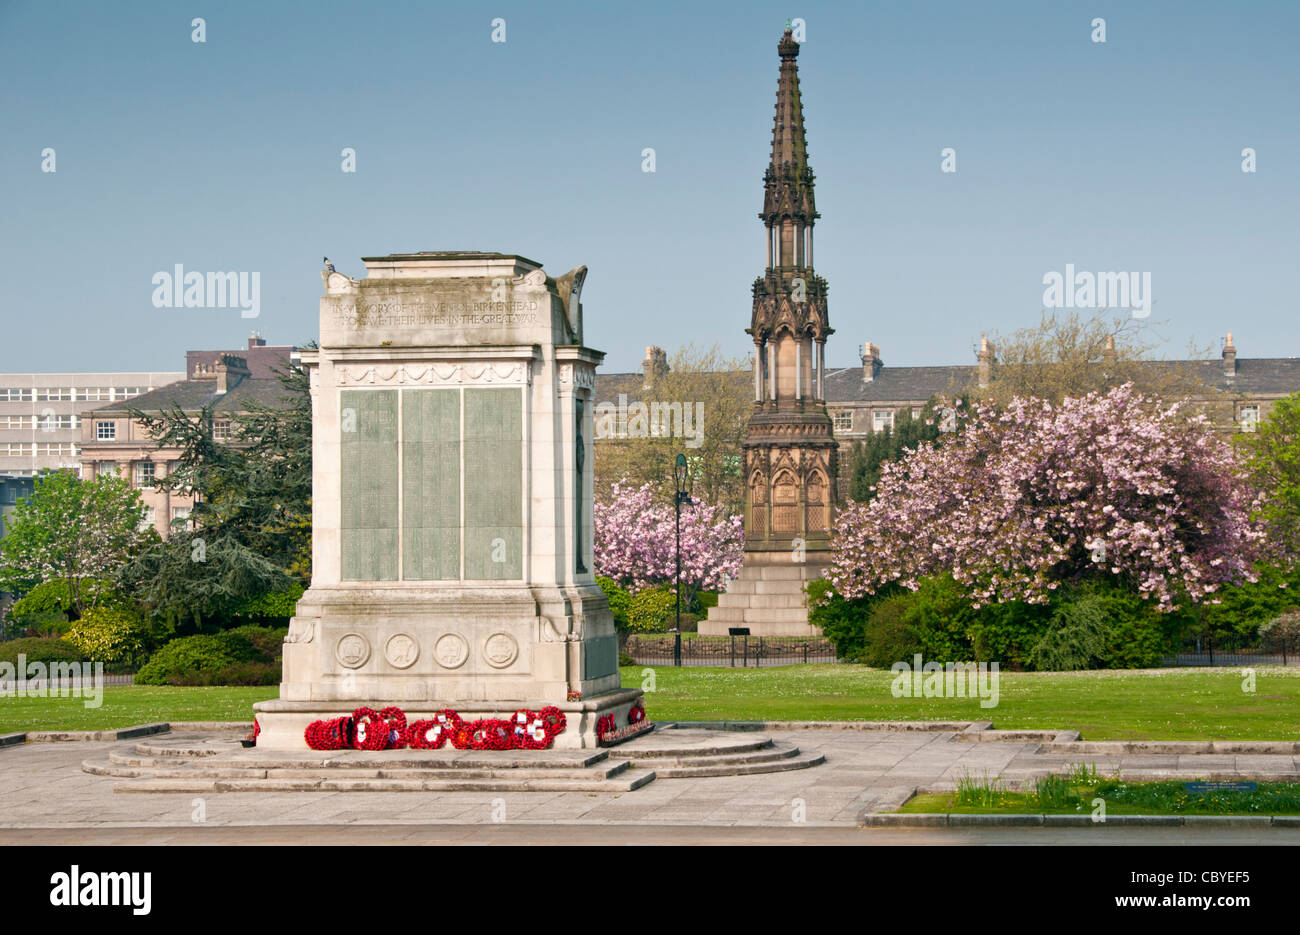 Poppies on the Cenotaph, Hamilton Square, Birkenhead, The Wirral, Merseyside, England, UK Stock Photo